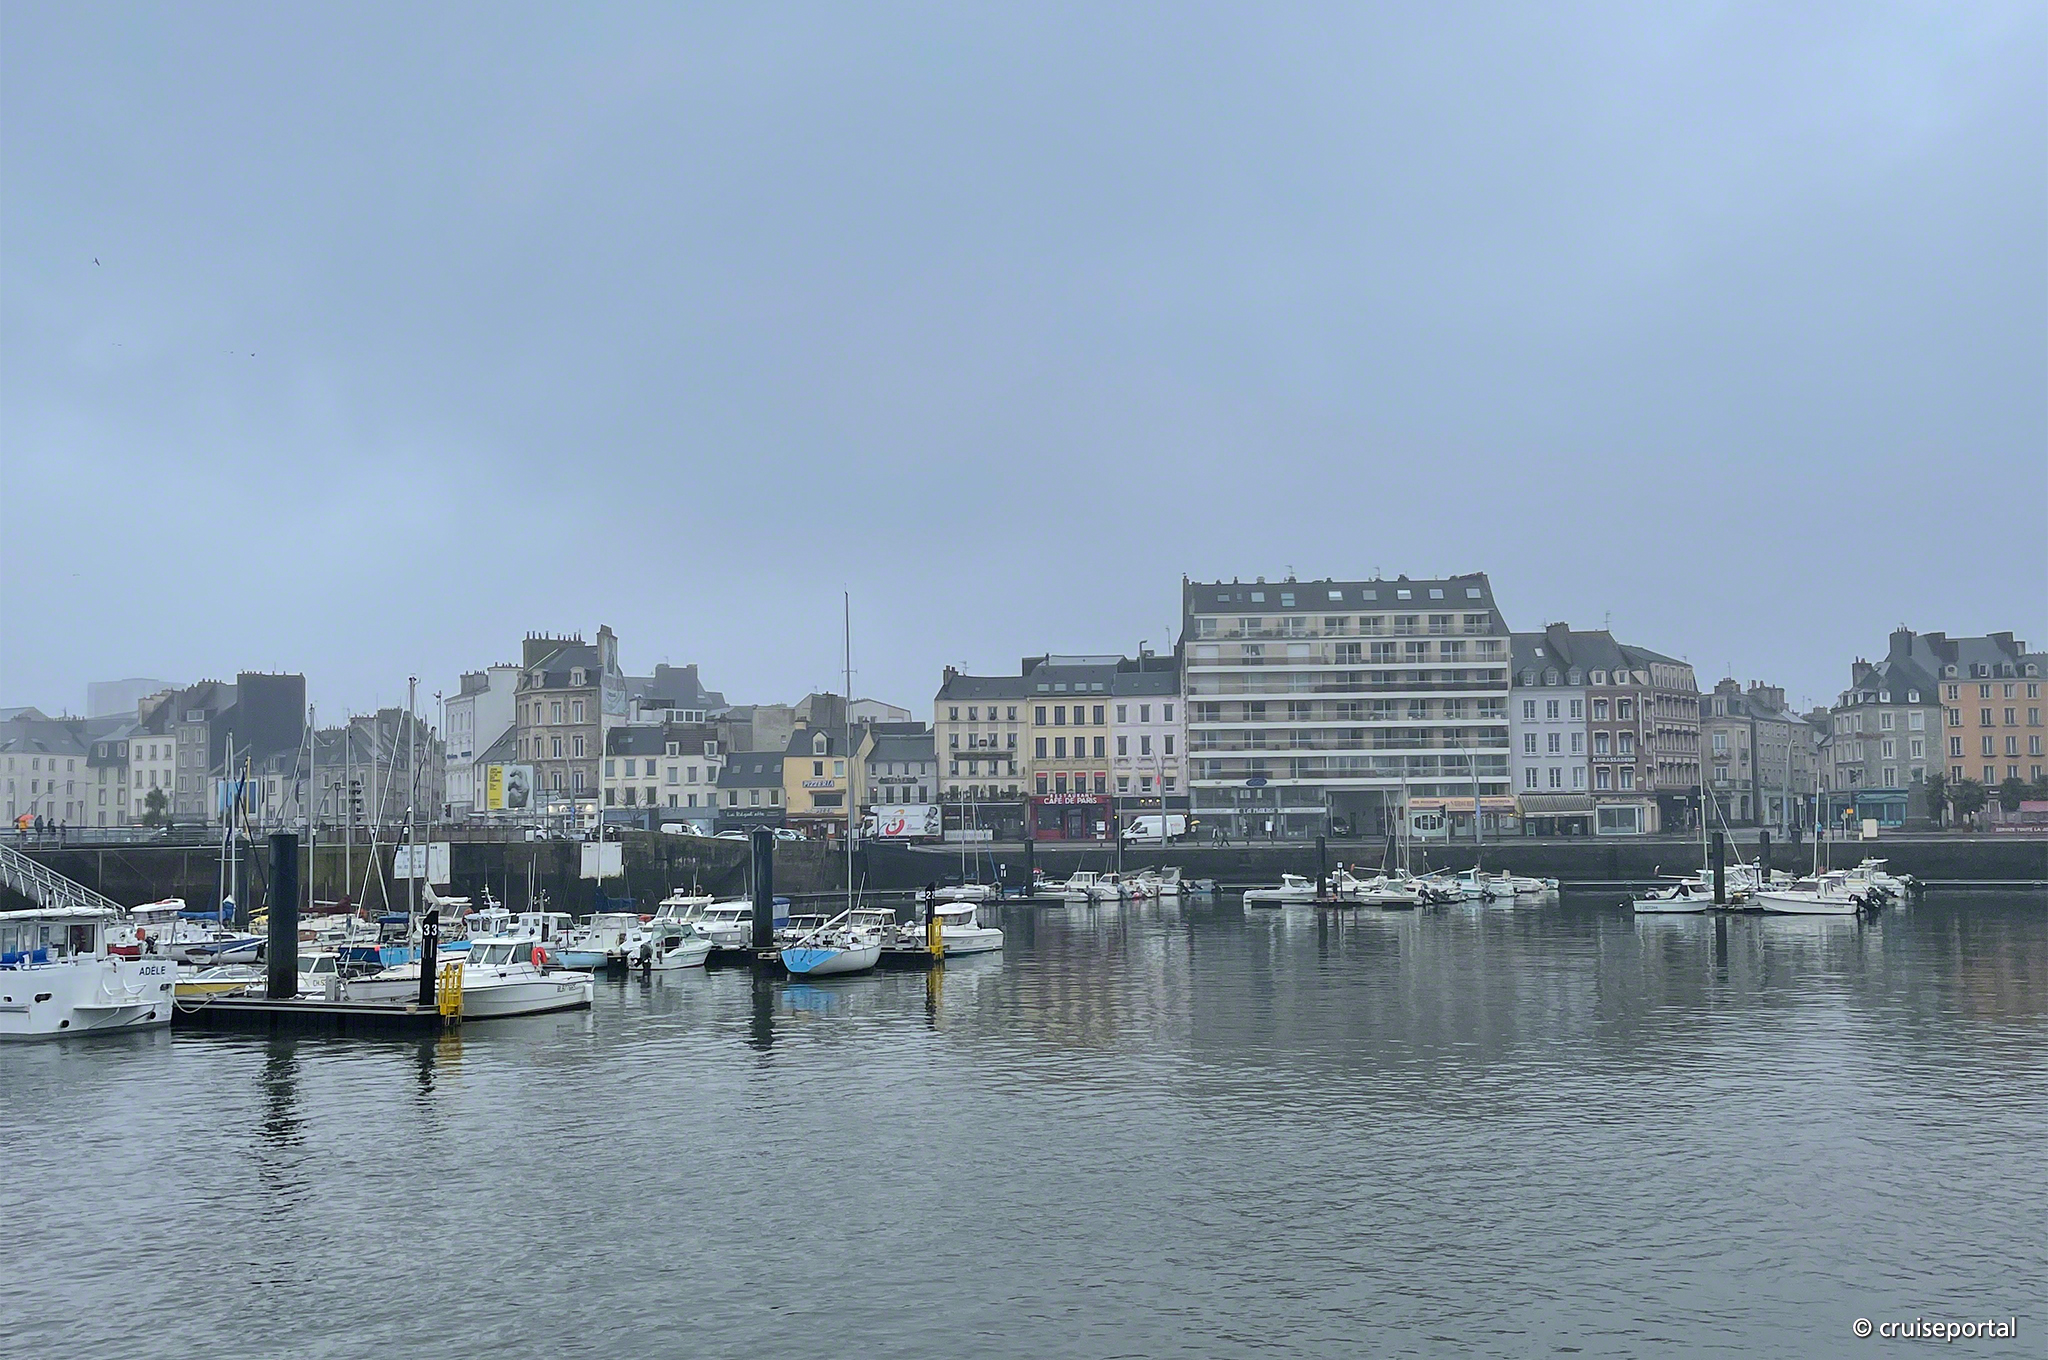 Cherbourg-Octeville